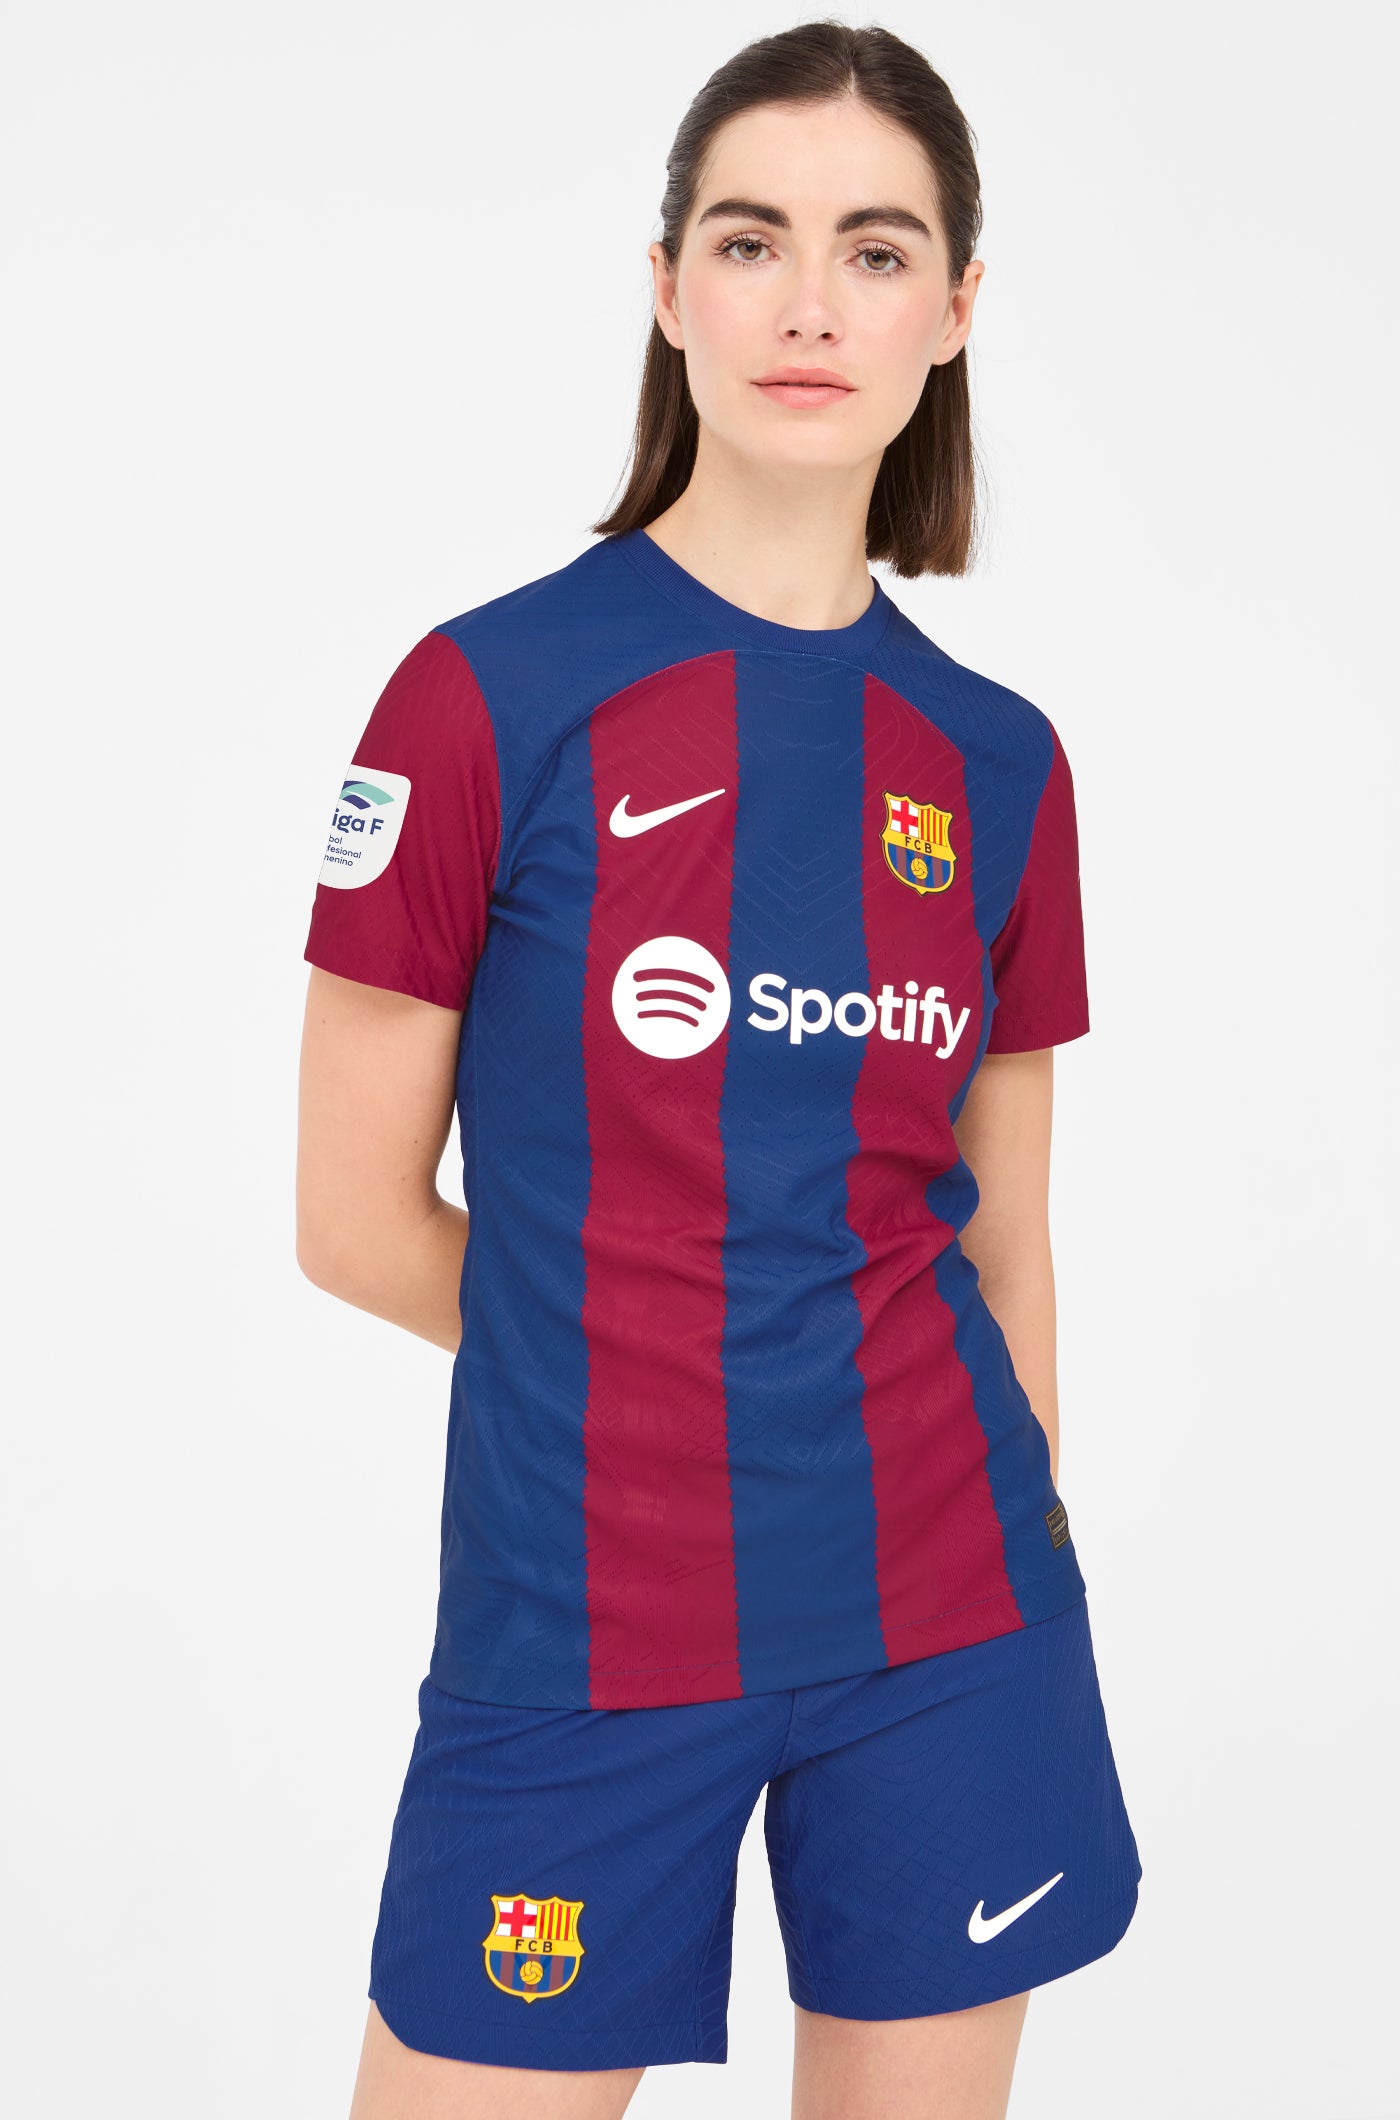 Liga F FC Barcelona Home Shirt 23/24 Player's Edition - Women - PINA